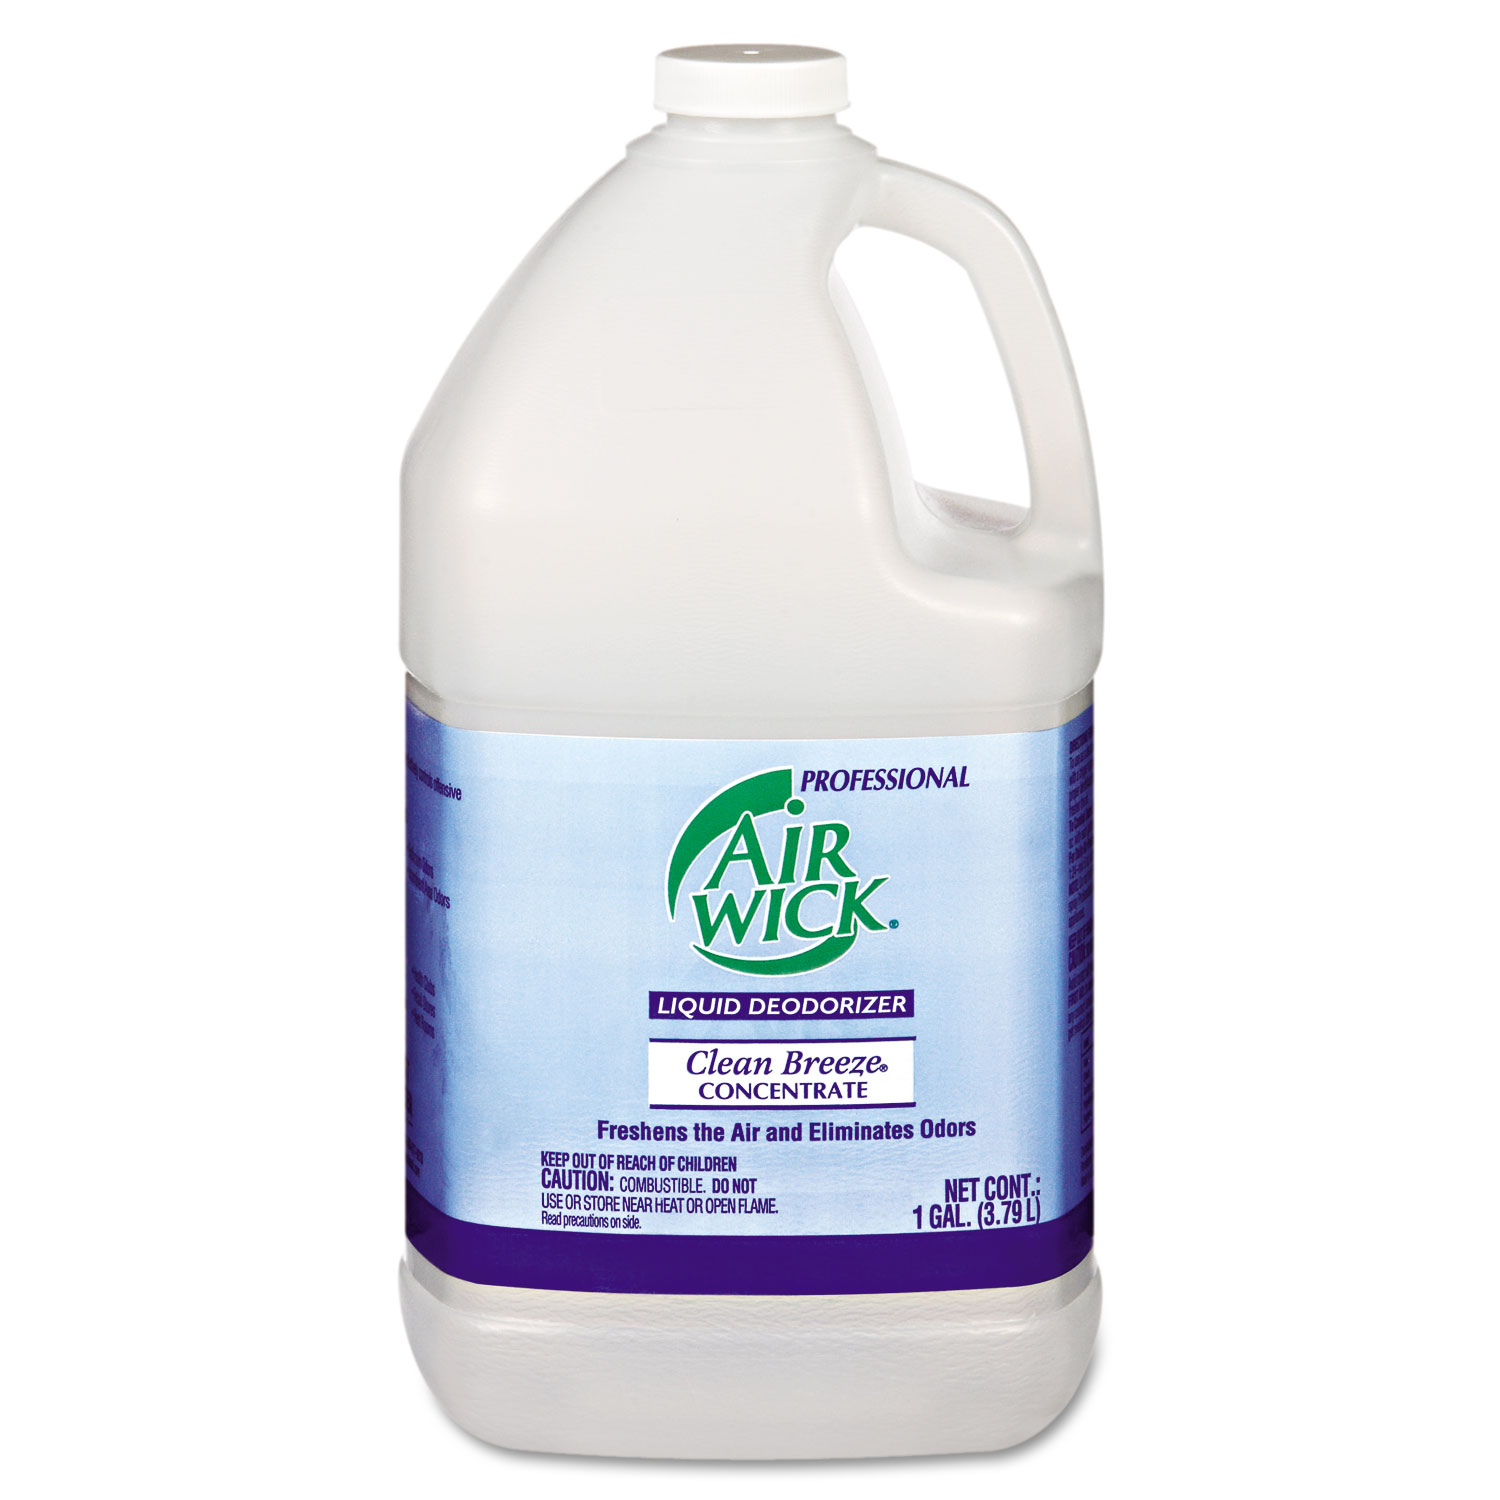  Professional Air Wick 36241-06732 Liquid Deodorizer, Clean Breeze, 1 gal, Concentrate, 4/Carton (RAC06732) 